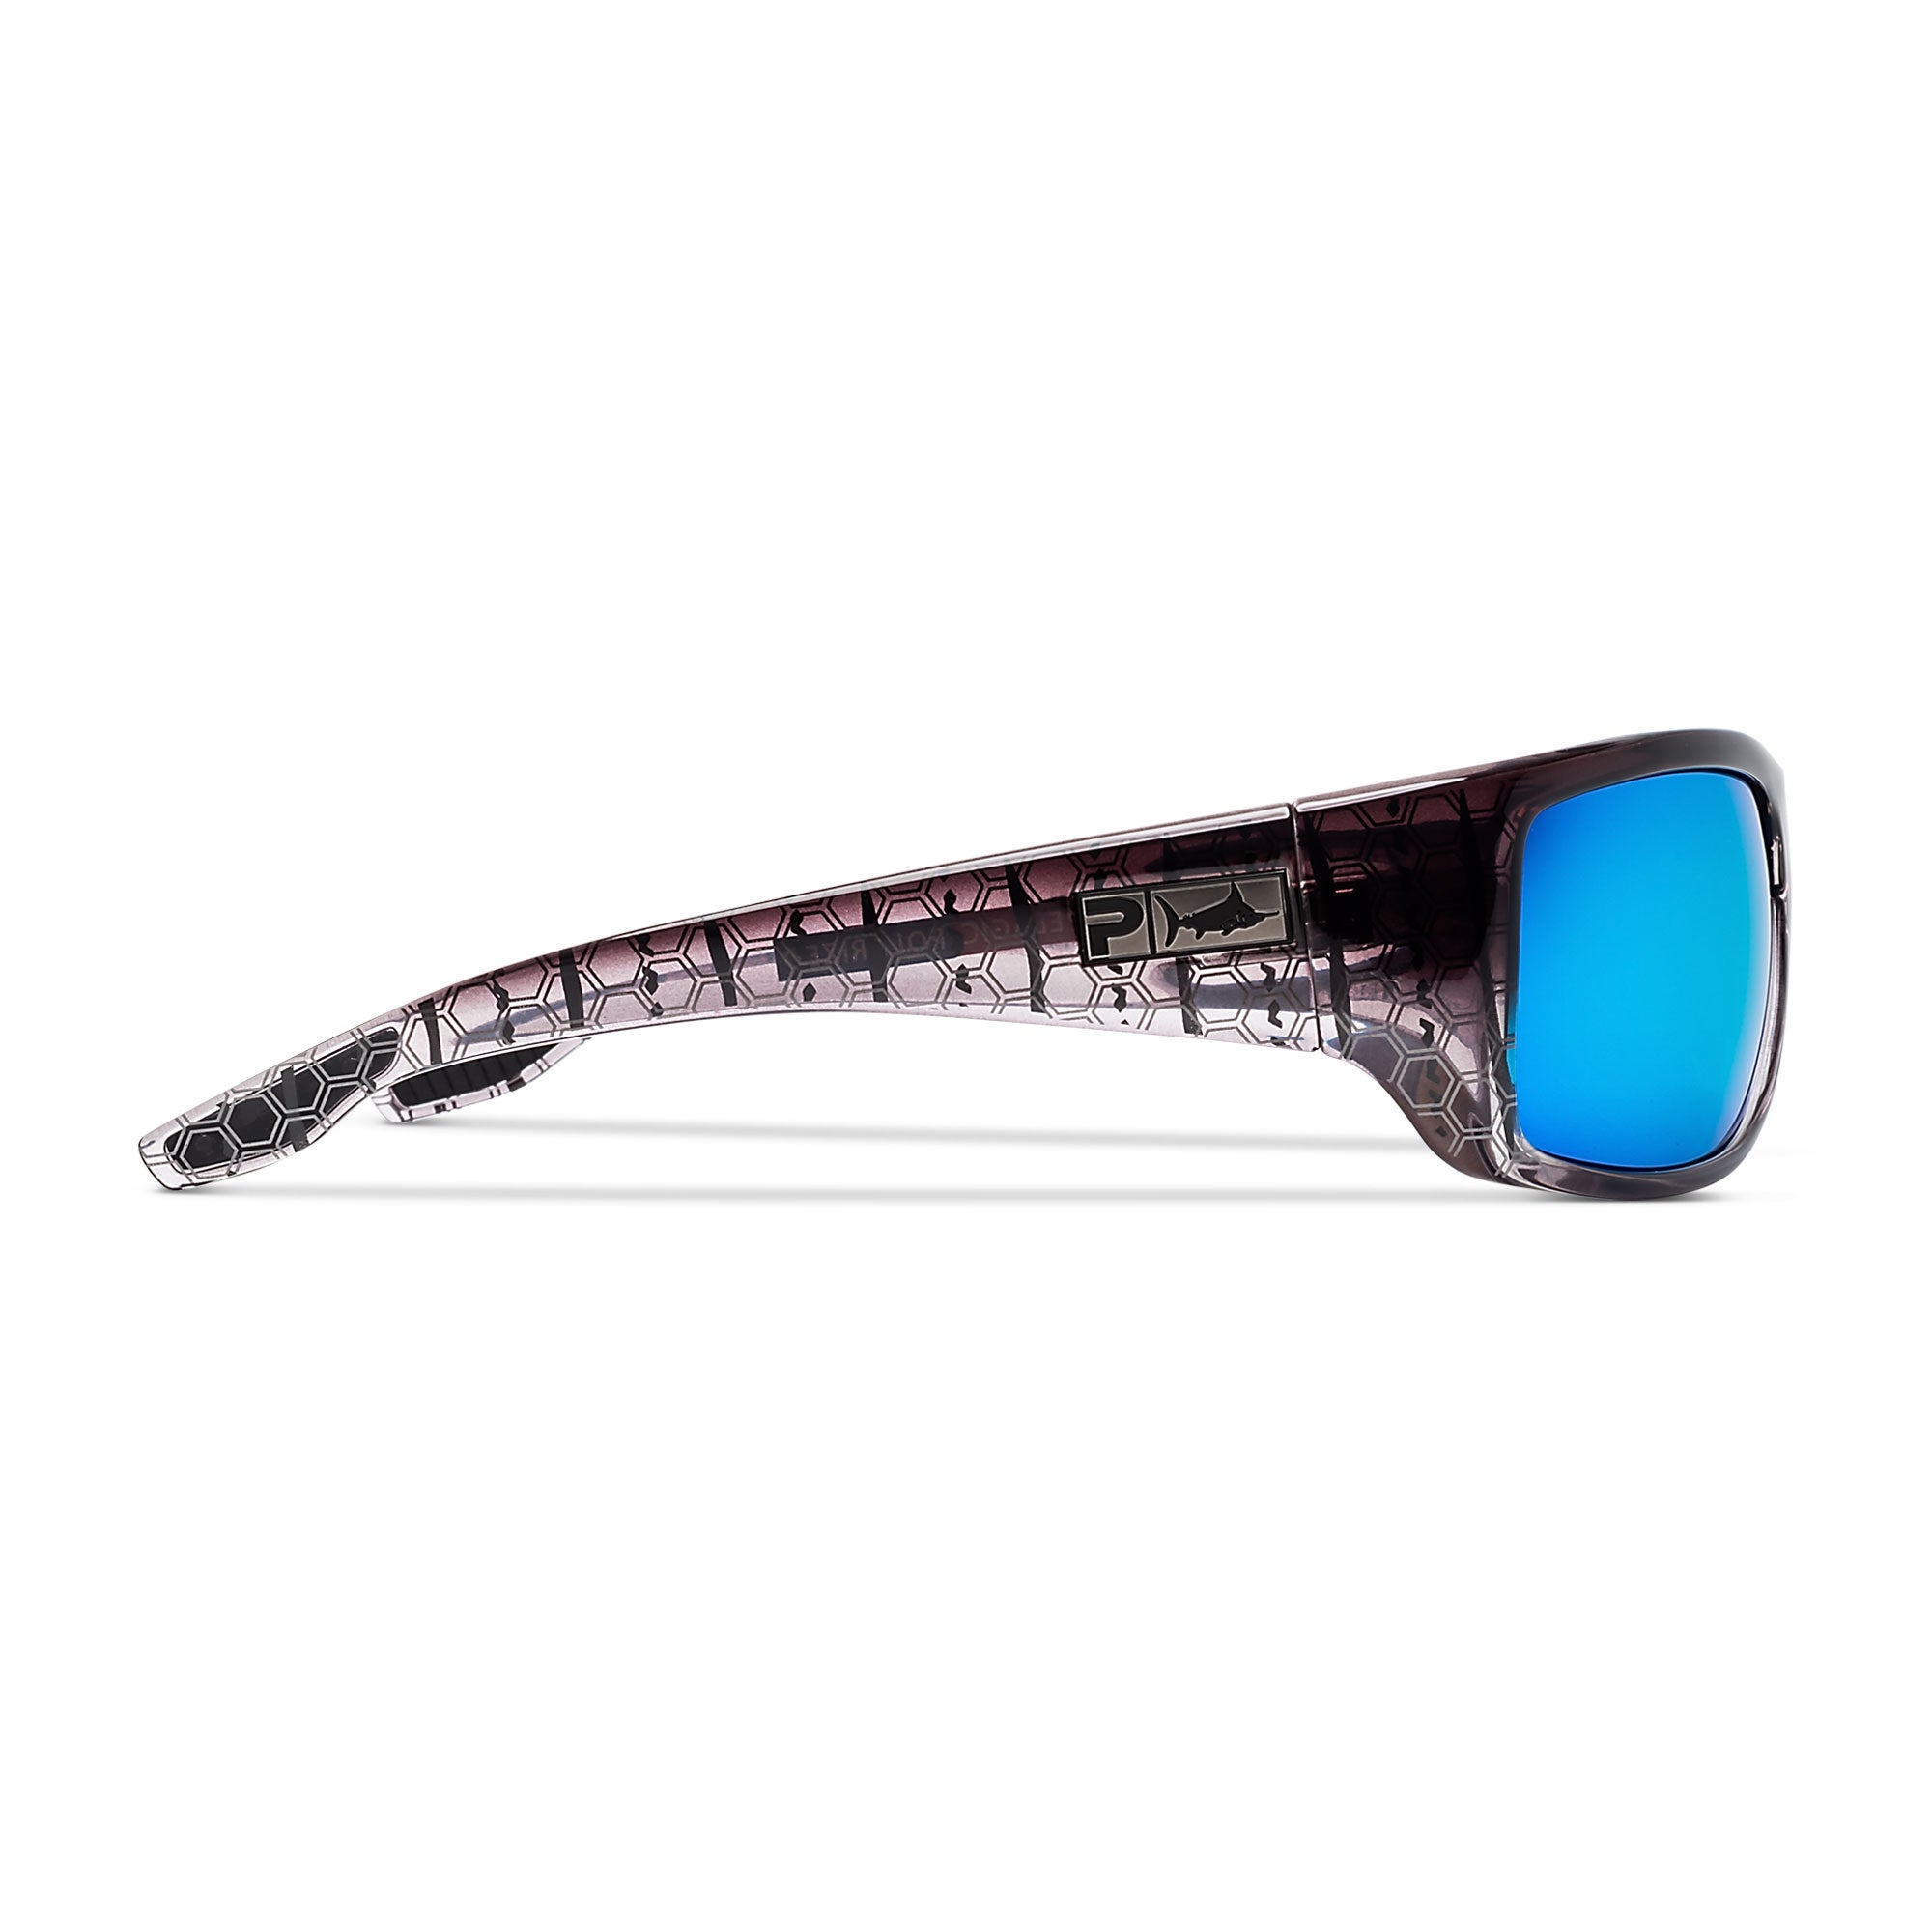 Fish Hook - Polarized Poly Lens Fishing Sunglasses